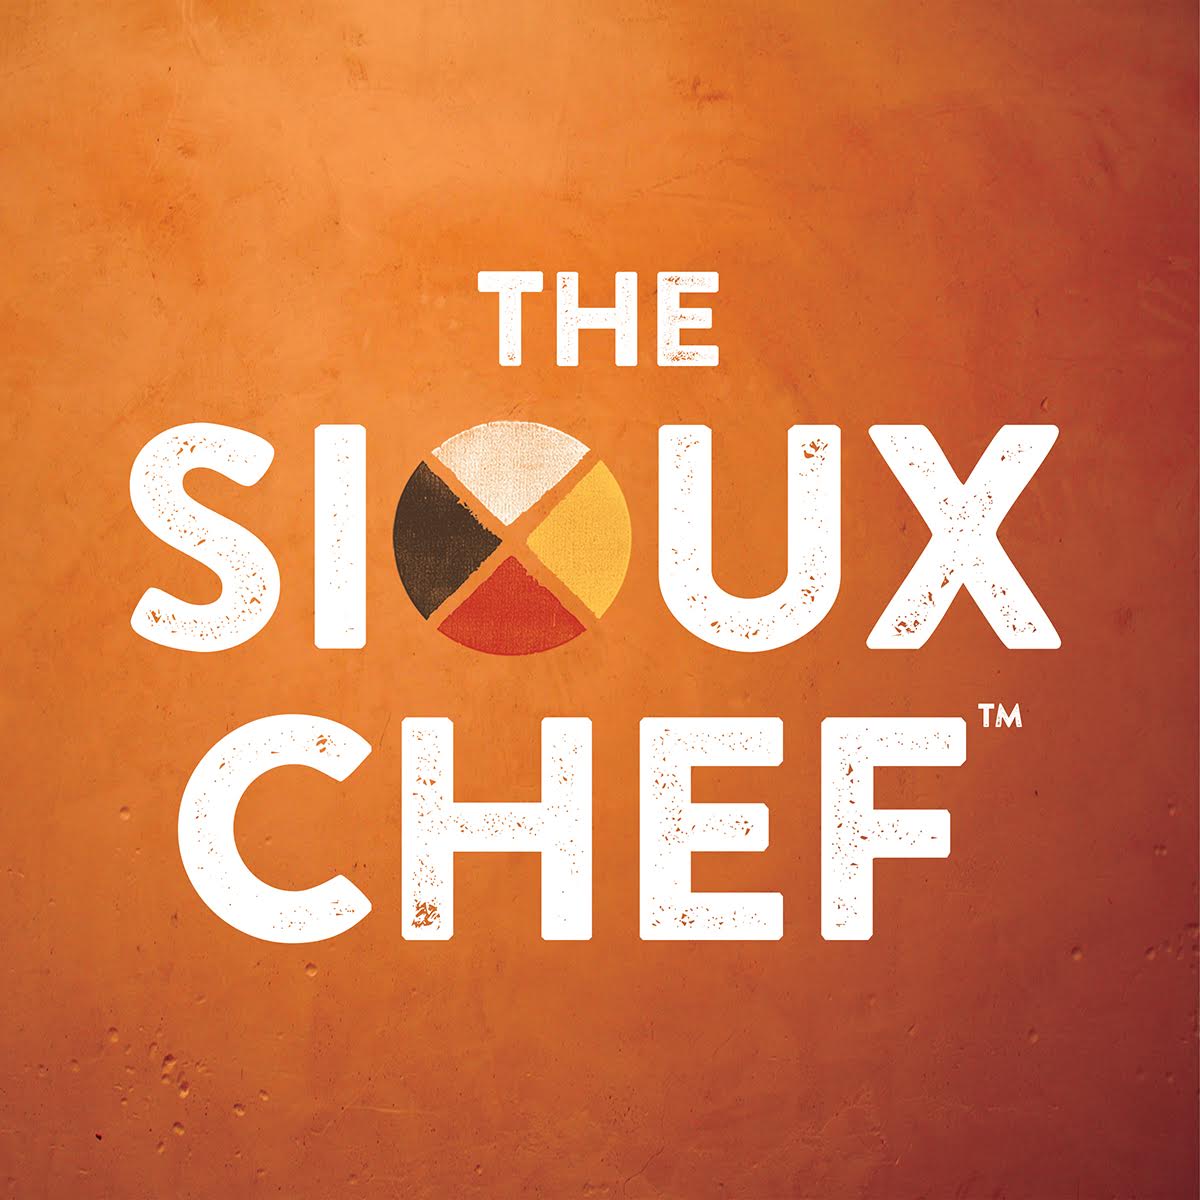 Sioux Chef logo